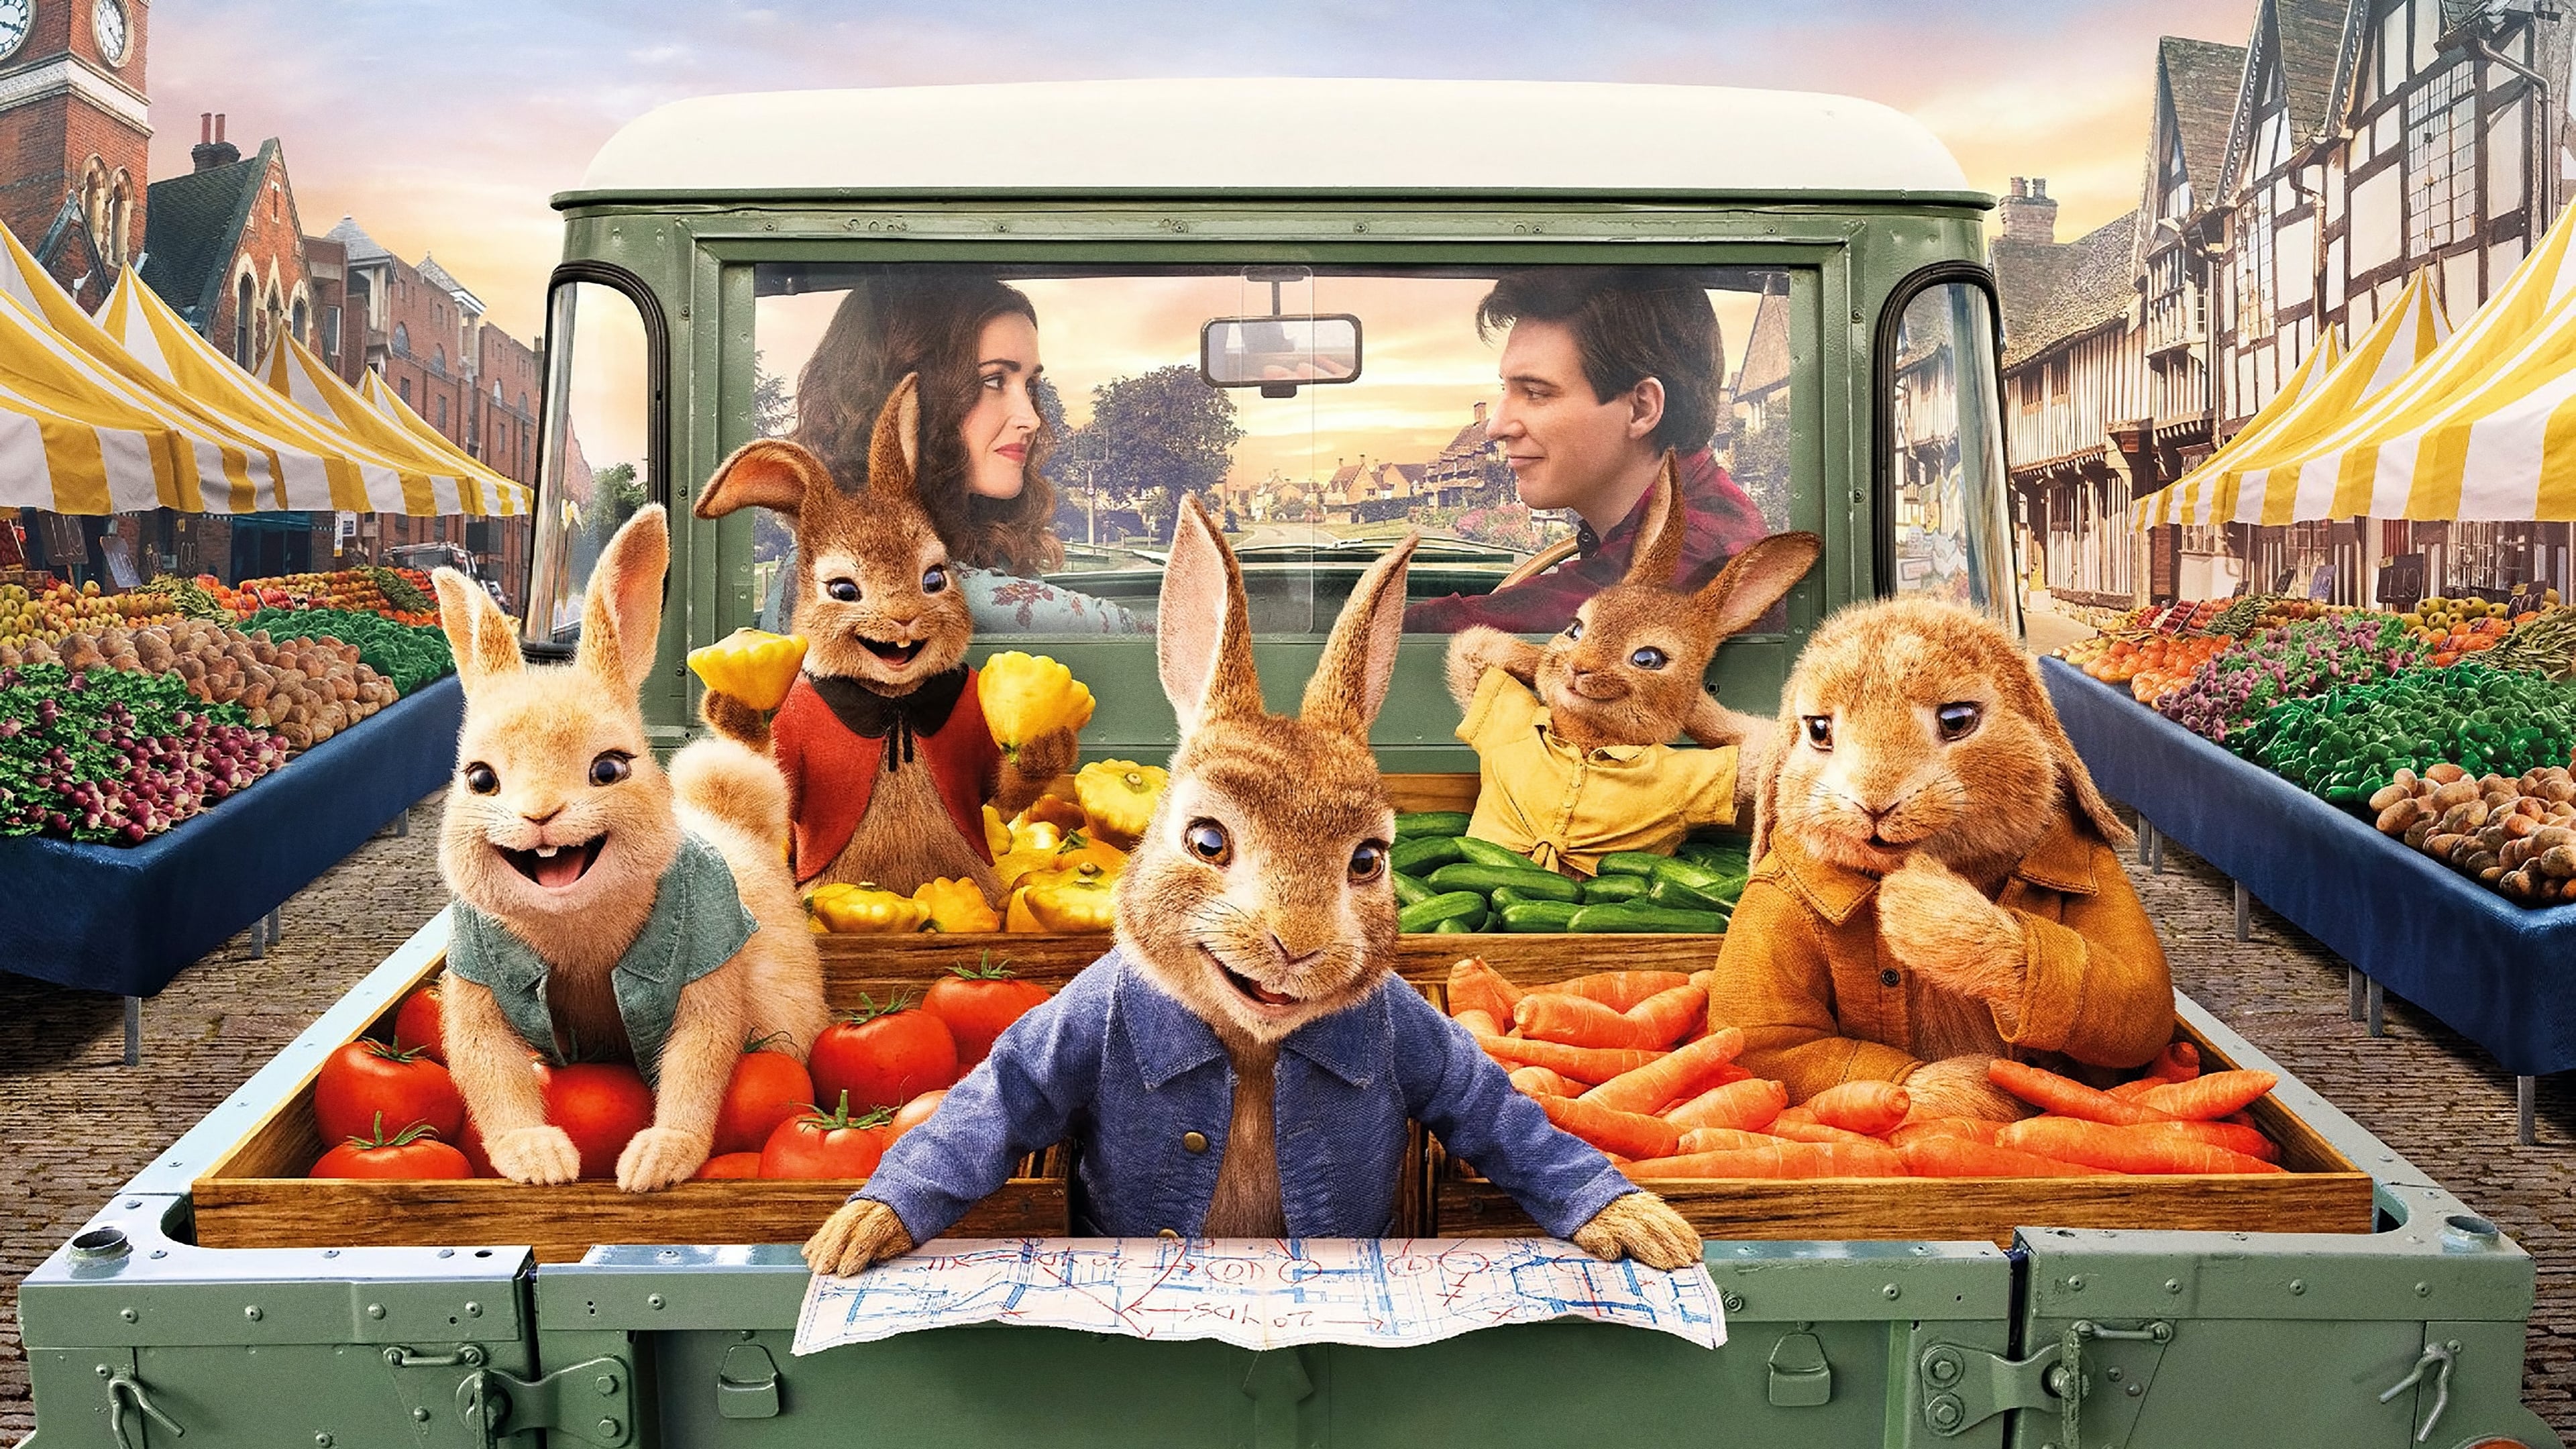  Peter Rabbit 2: The Runaway movie cast 2021